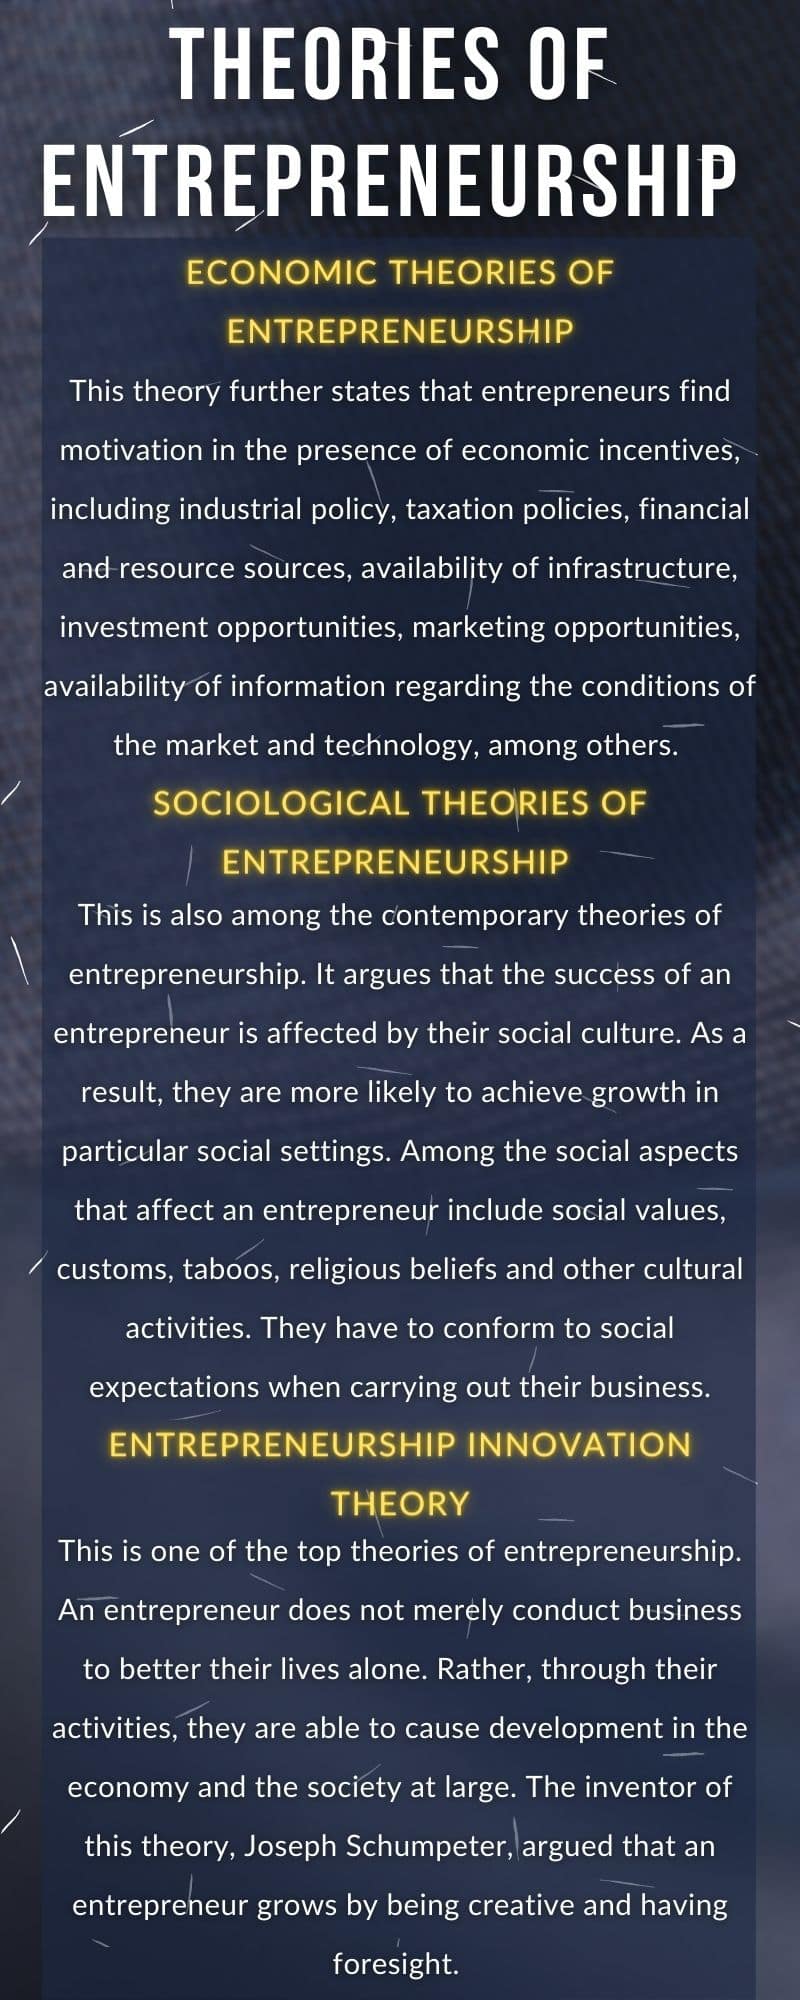 Theories of entrepreneurship